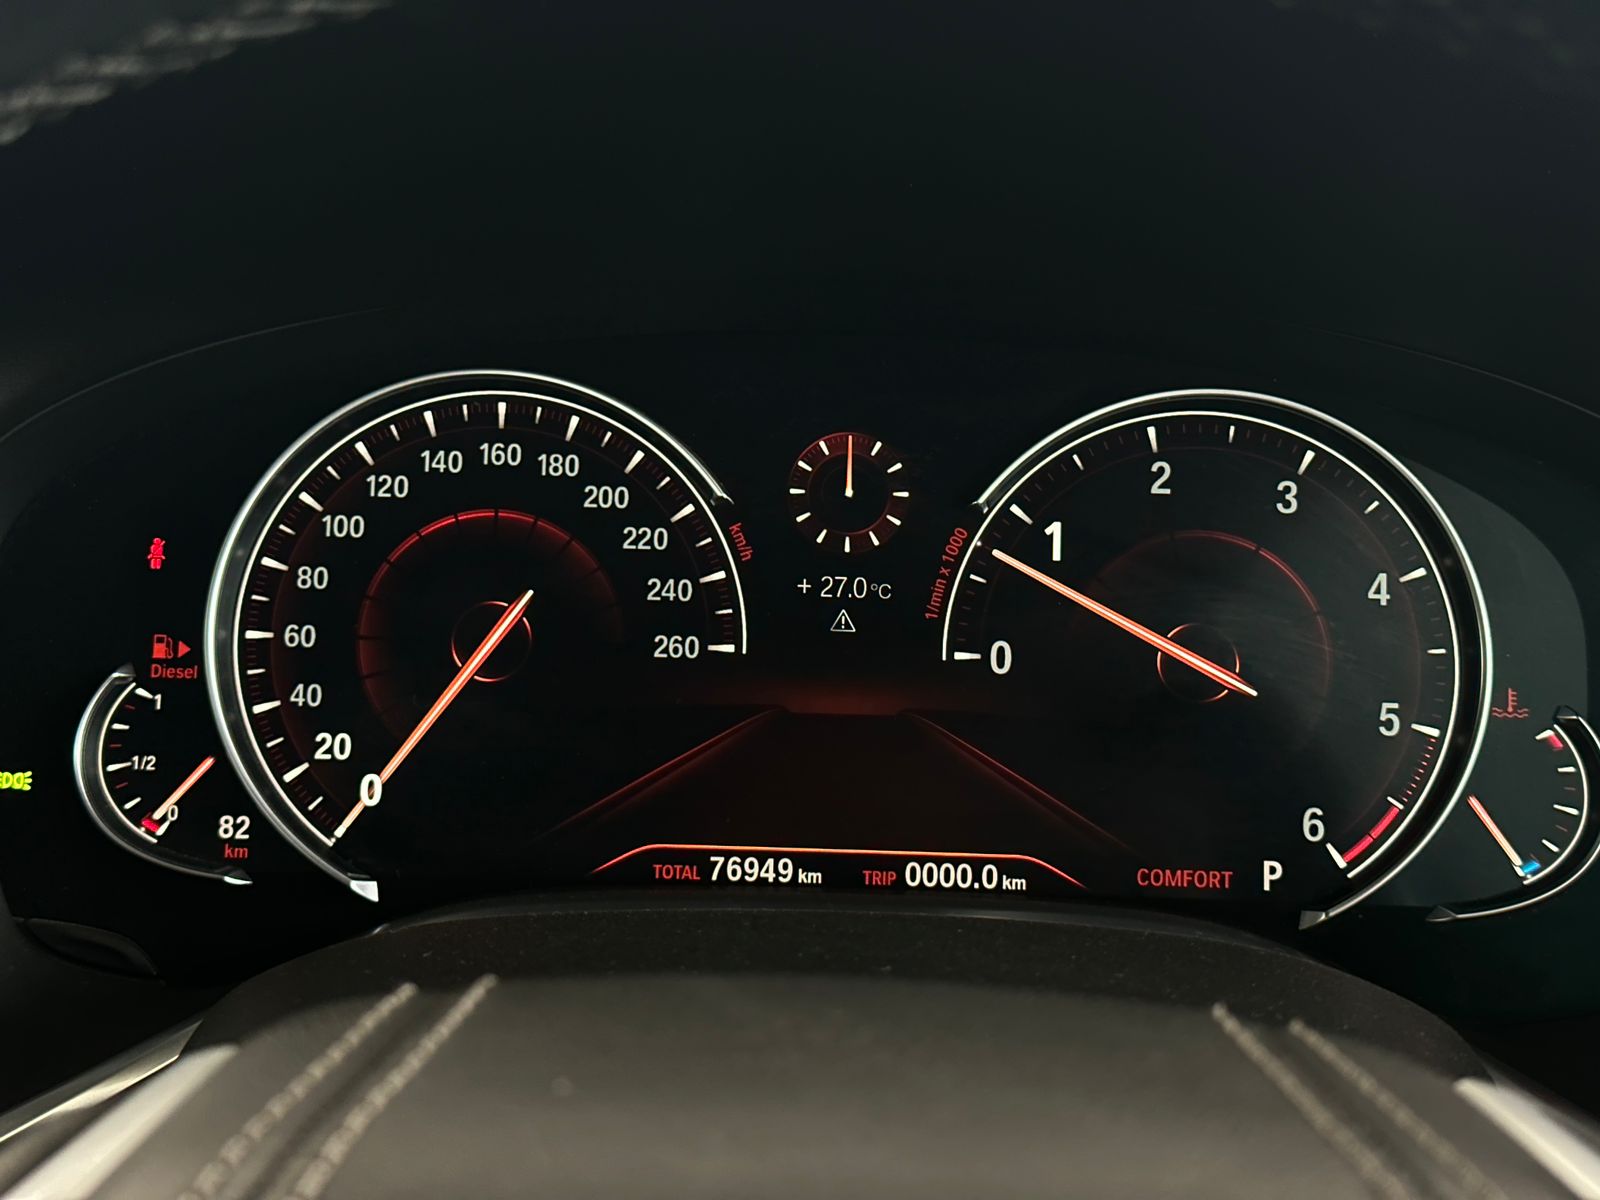 BMW 730 LD - 2016 model - 76949 kms speedo